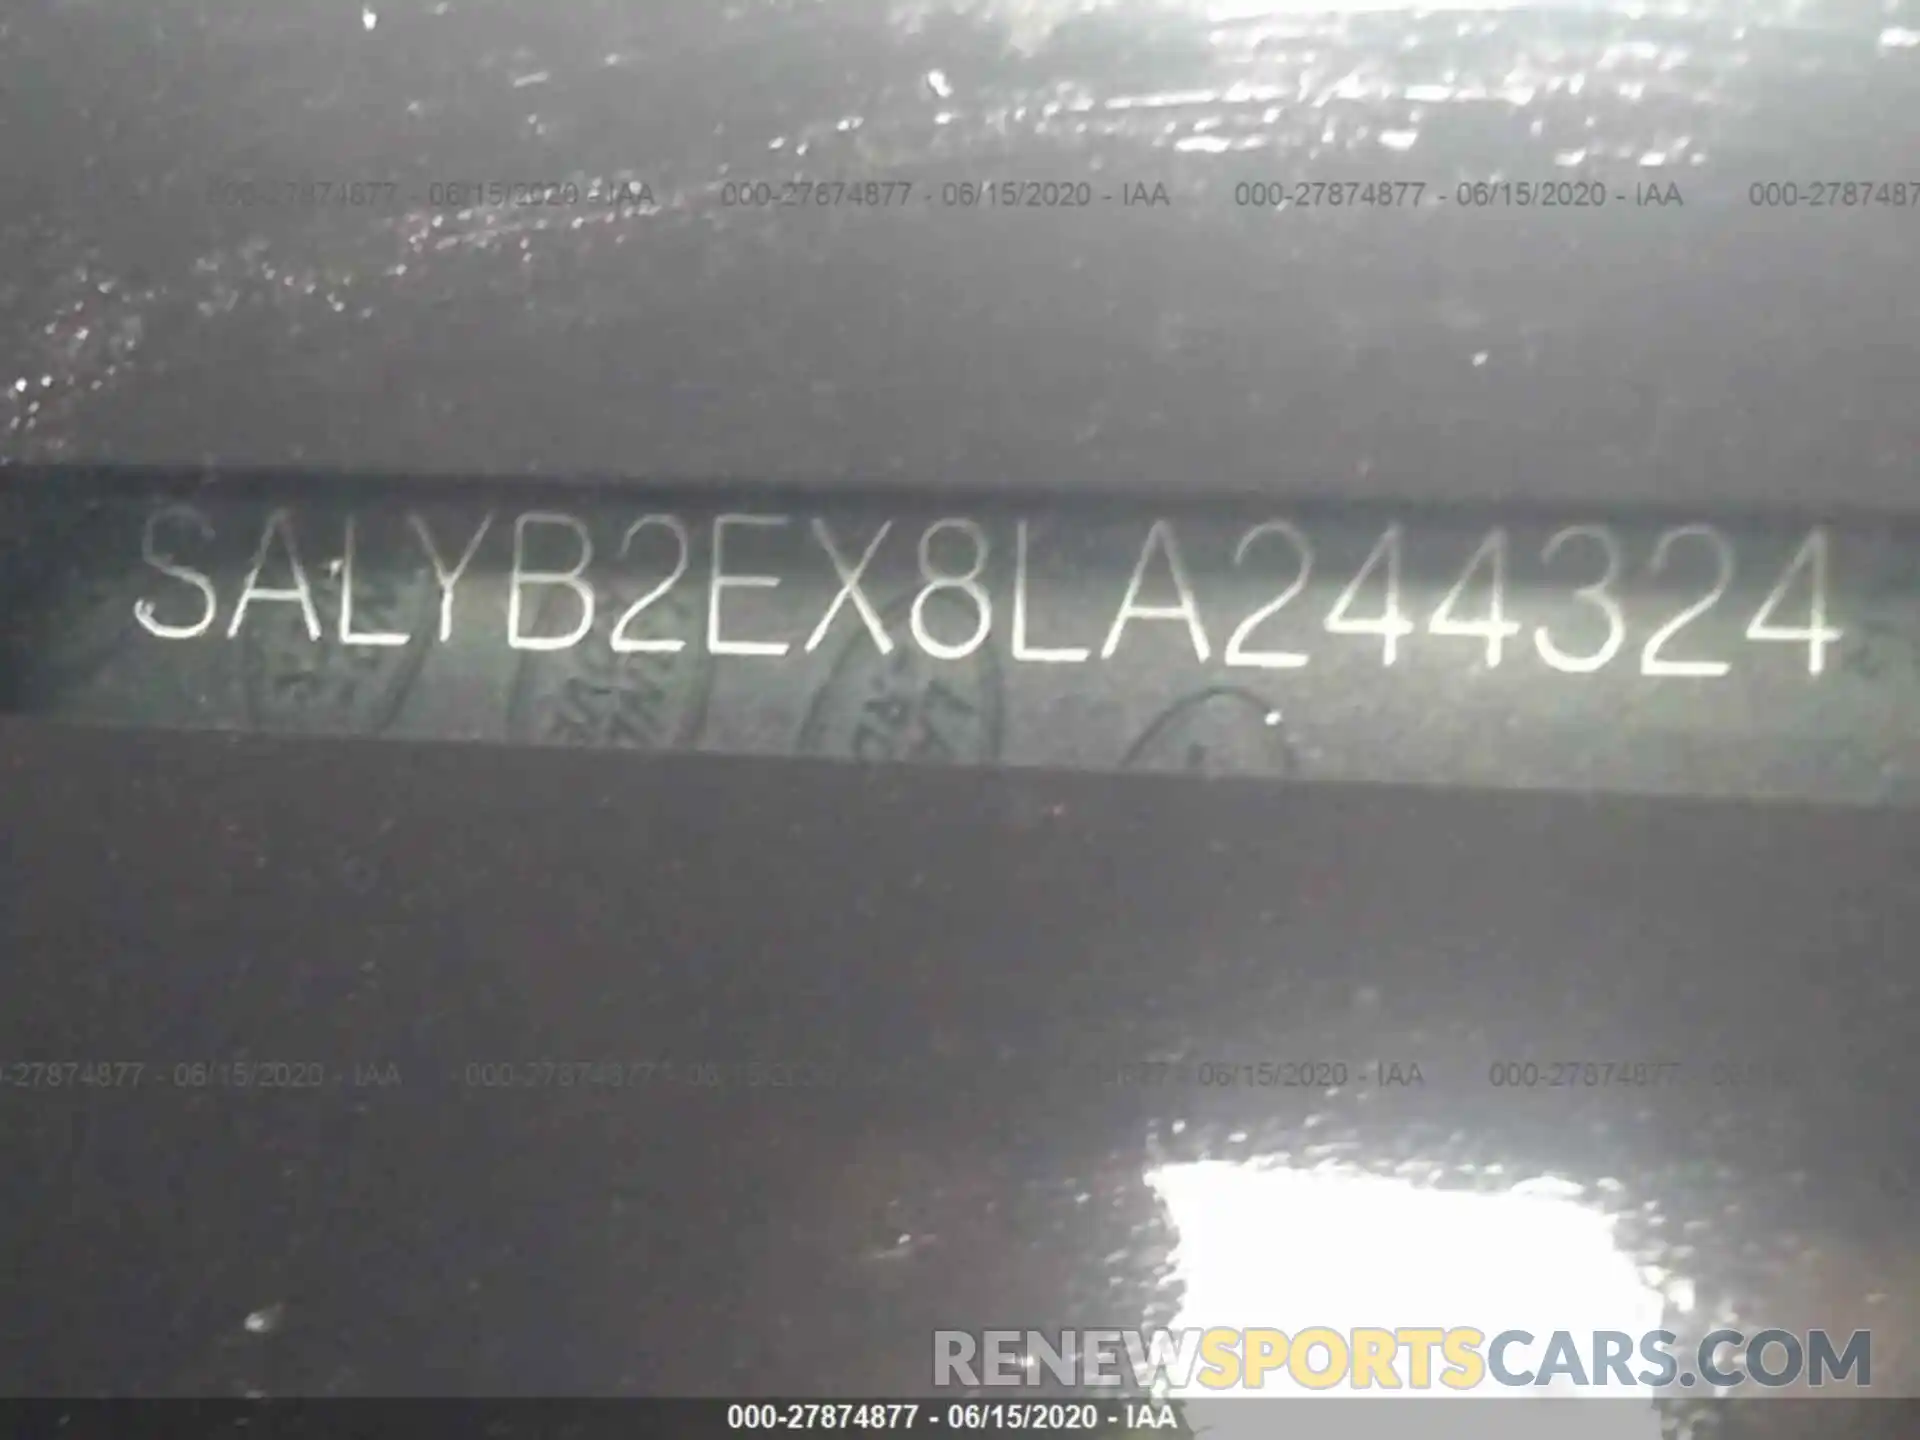 9 Photograph of a damaged car SALYB2EX8LA244324 LAND ROVER RANGE ROVER VELAR 2020